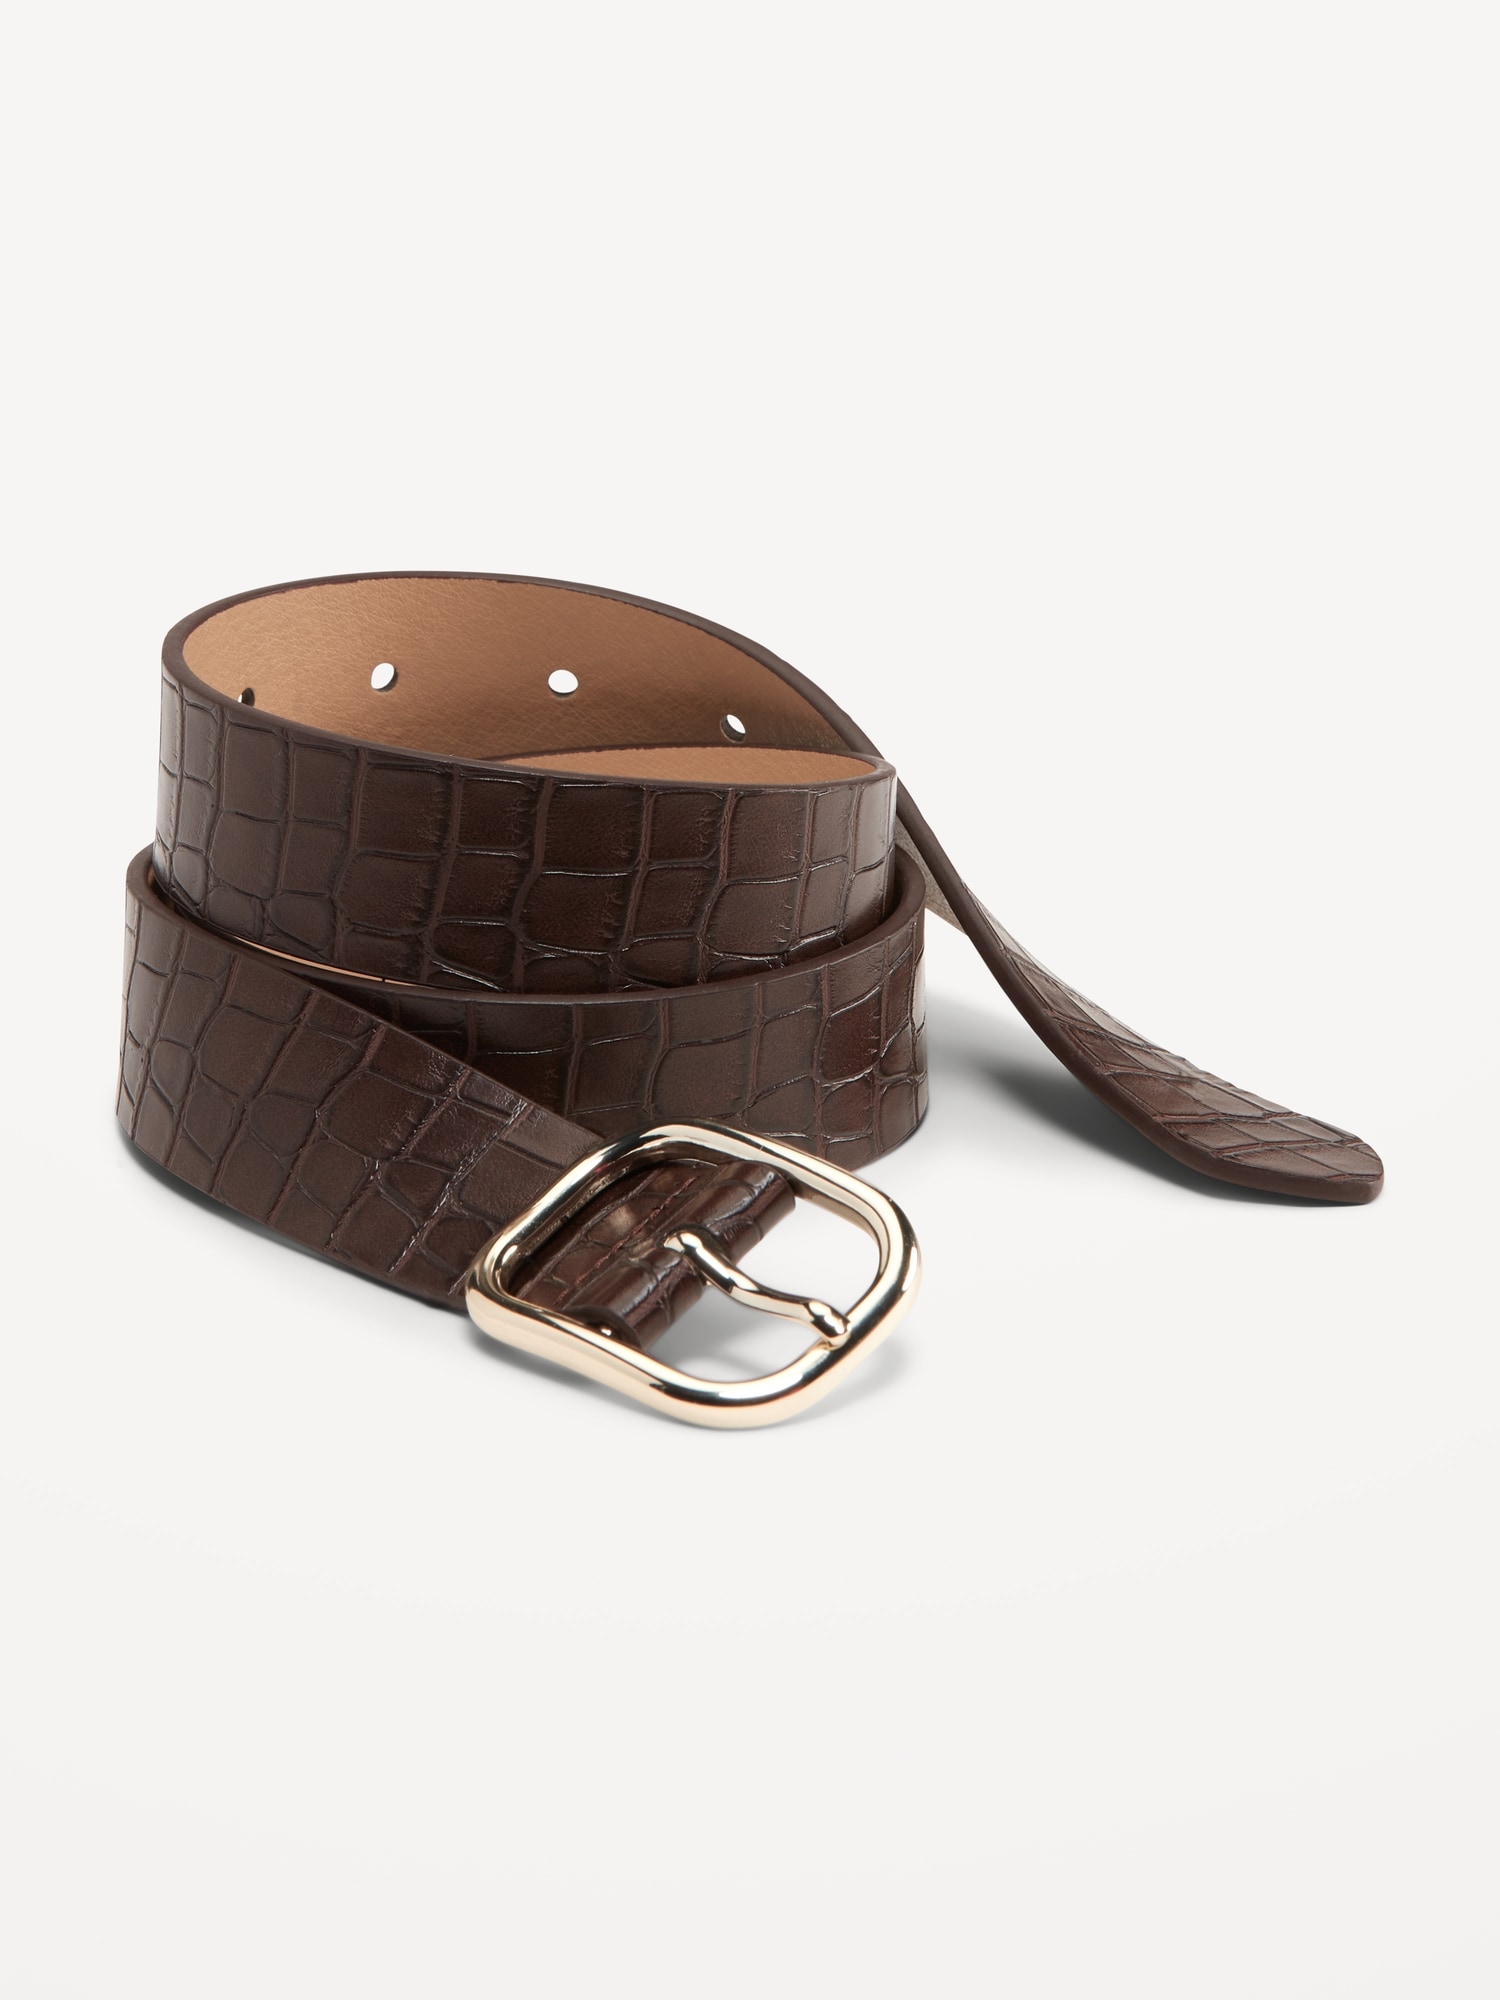 Burberry Women's Croc-Embossed Leather Belt